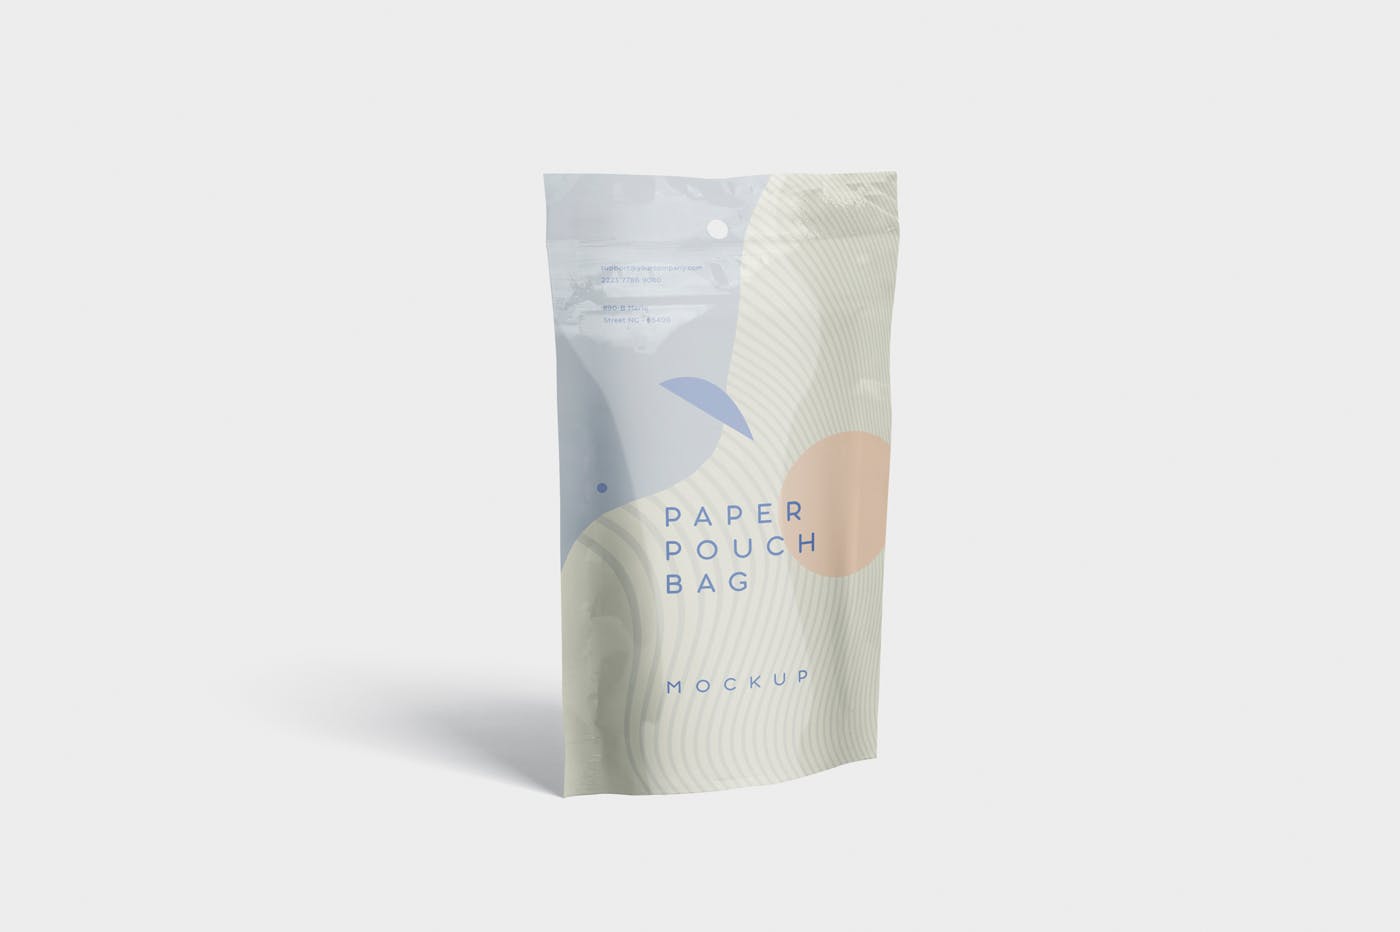 小尺寸零食包装纸袋设计图样机 Paper Pouch Bag Mockup in Small Size插图(2)